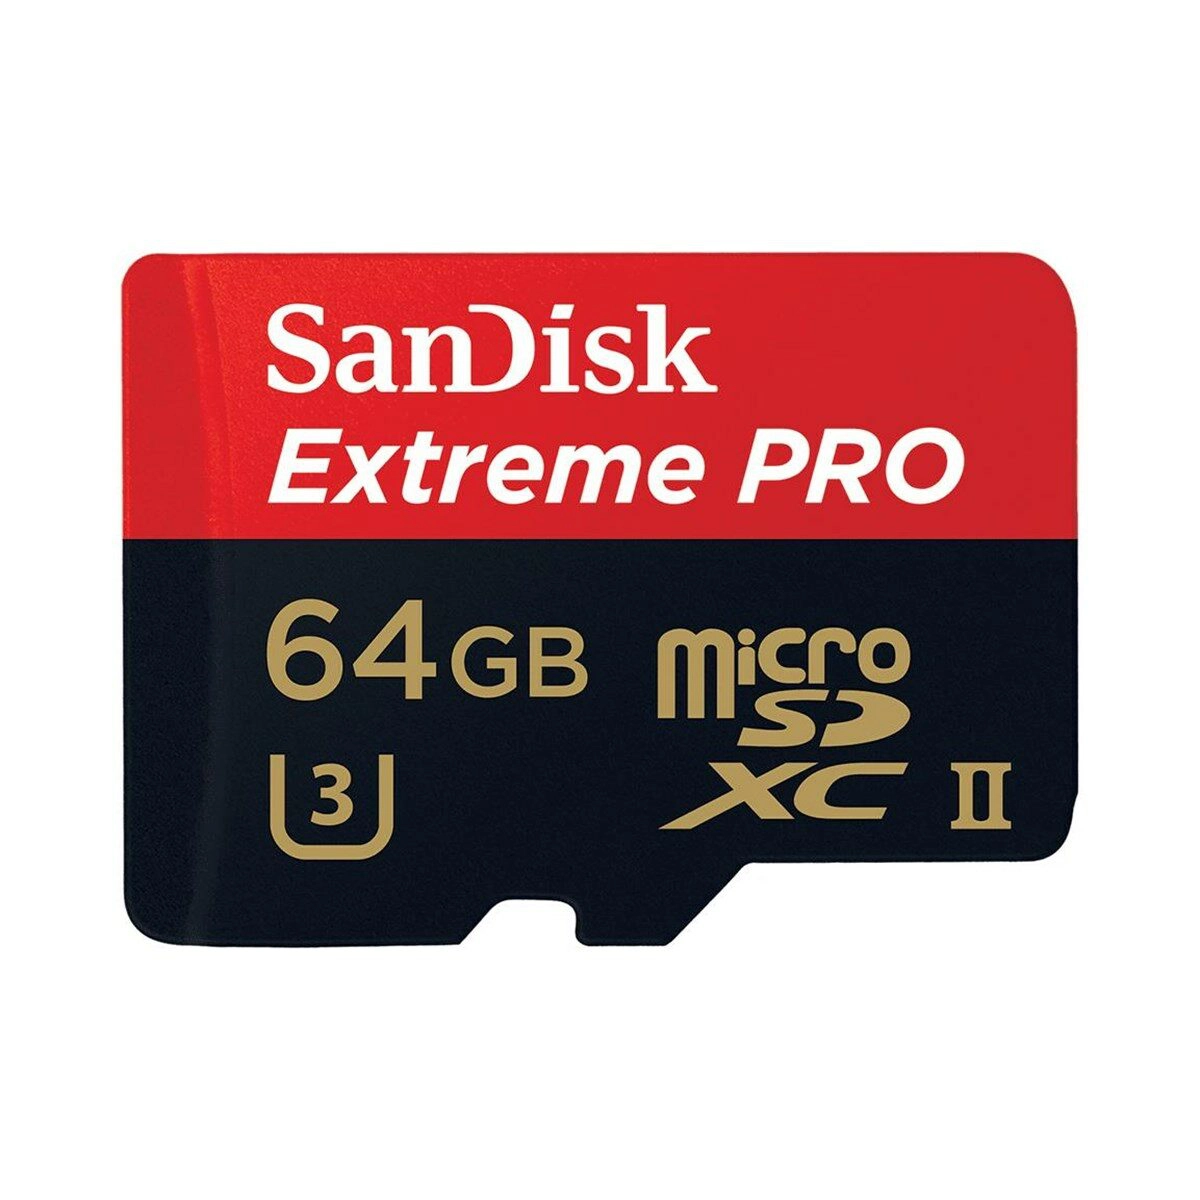 SanDisk Extreme PRO microSD UHS-II Card